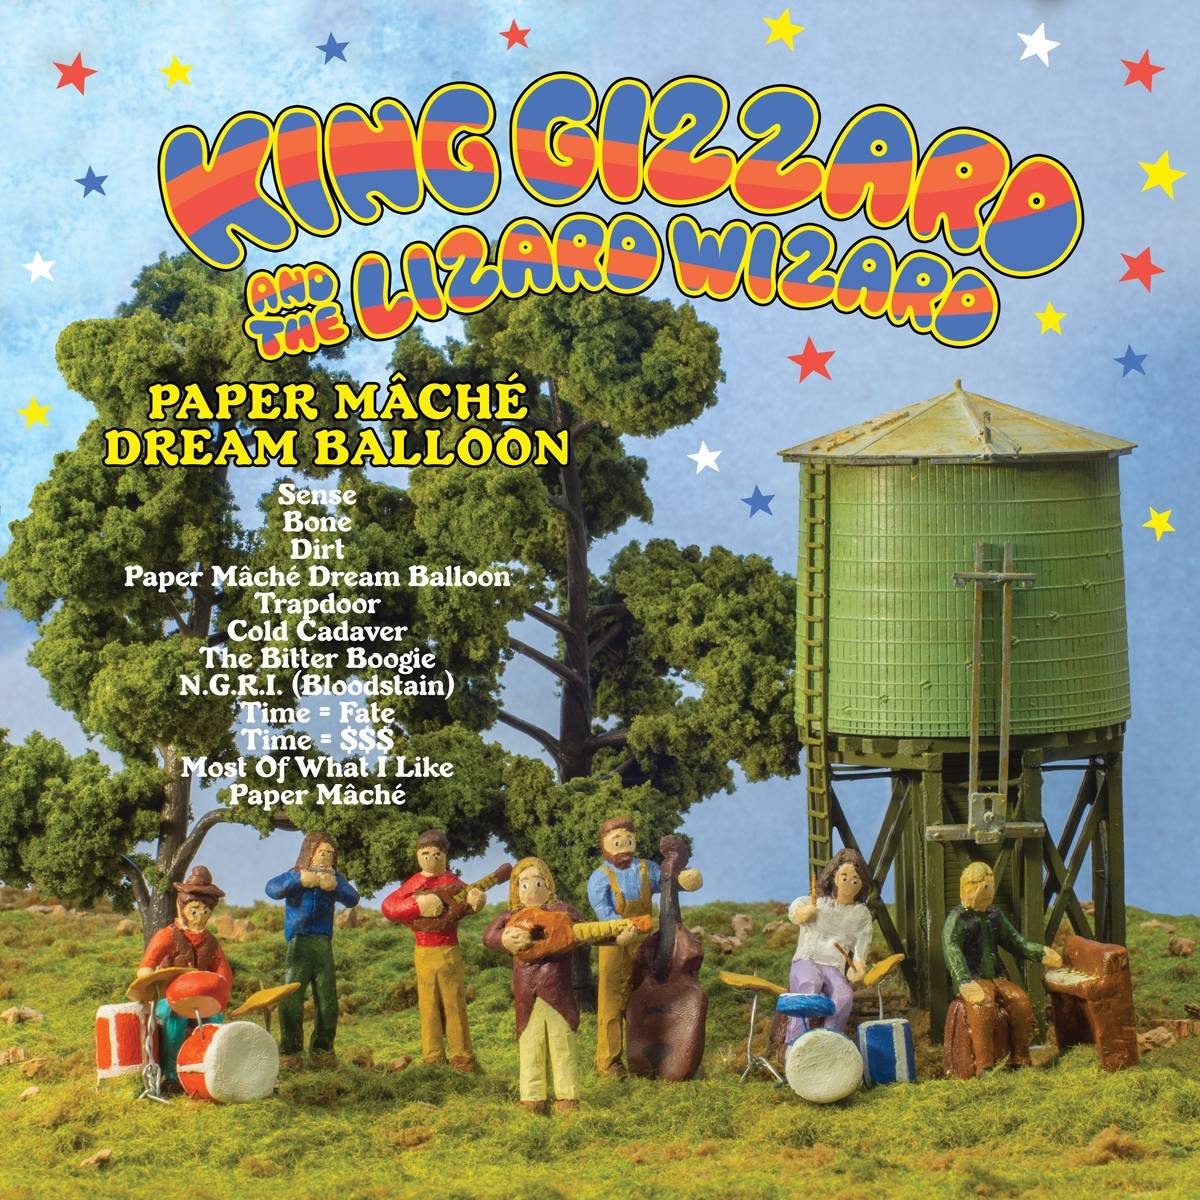 King Gizzard and The Lizard Wizard "Paper Mache Dream Ballon" LP